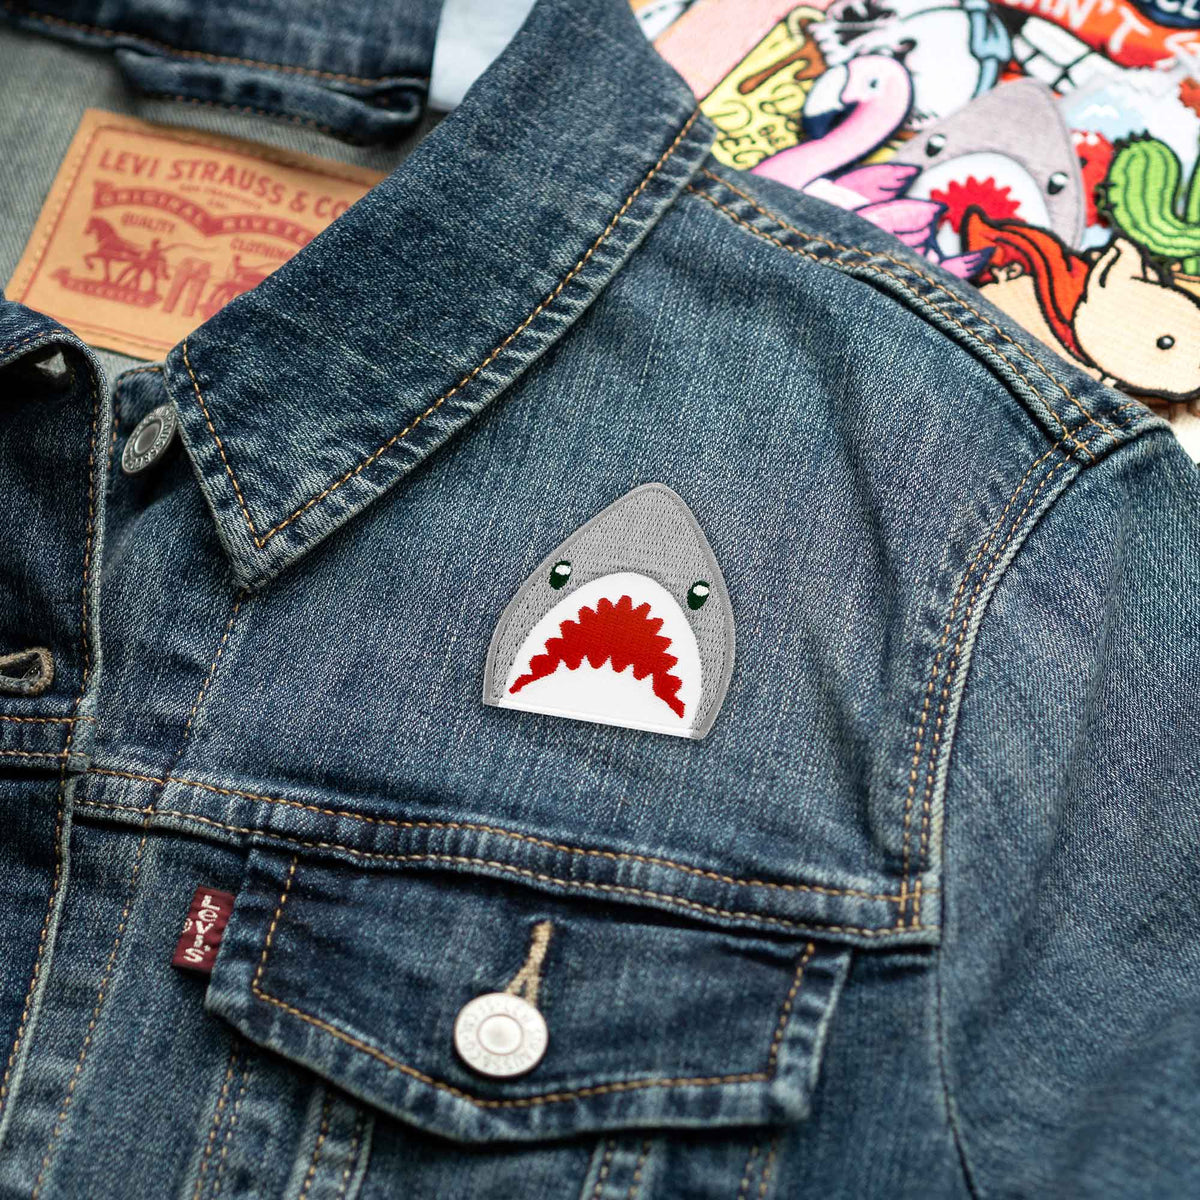 Shark Emoji patch on denim jacket